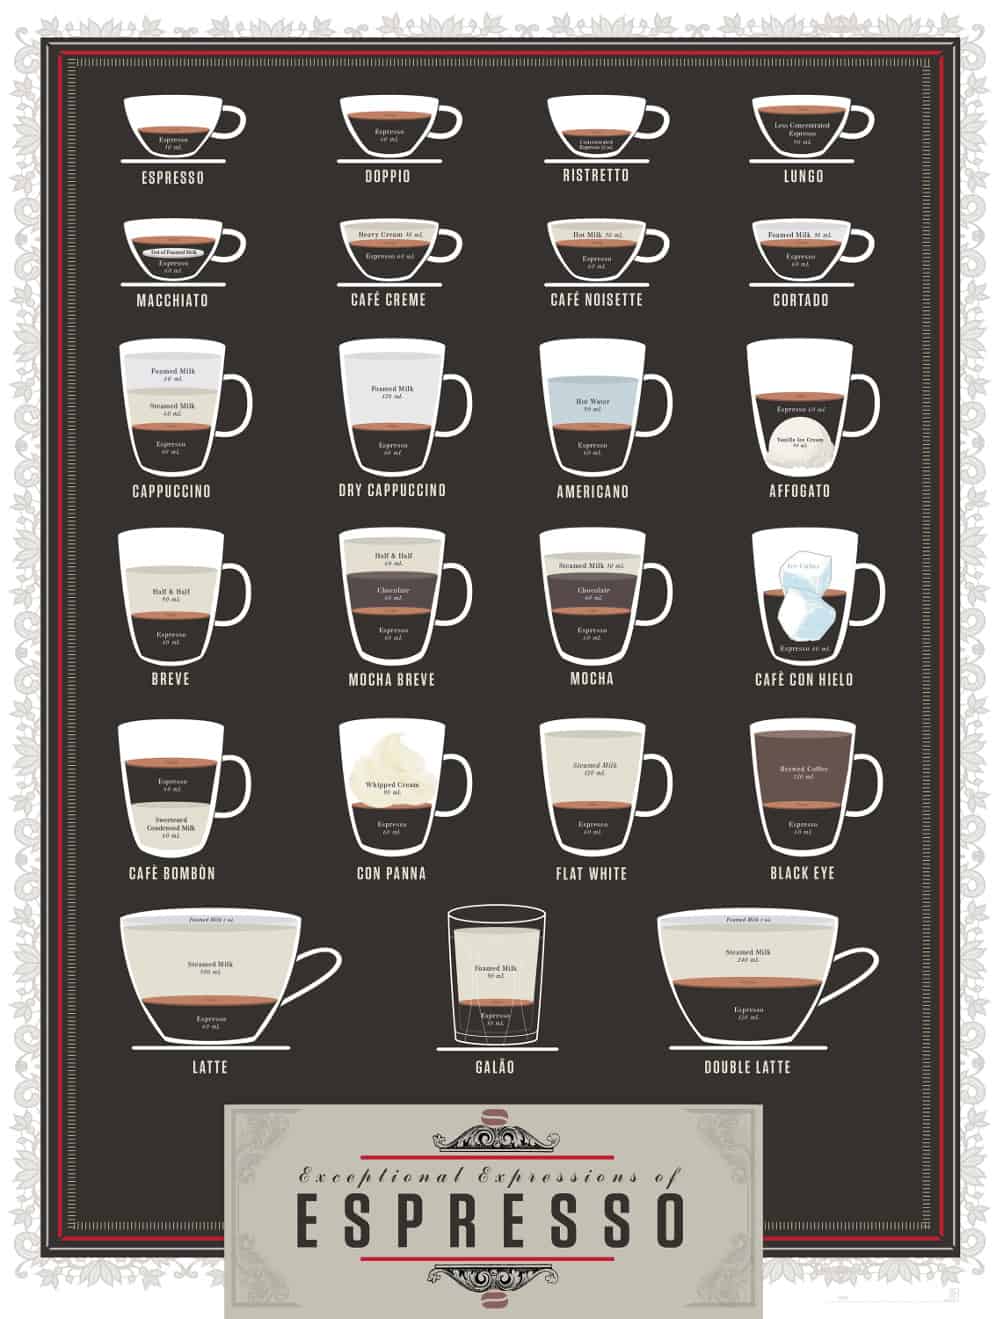 Espresso Drink Recipes - Espresso & Coffee Guide